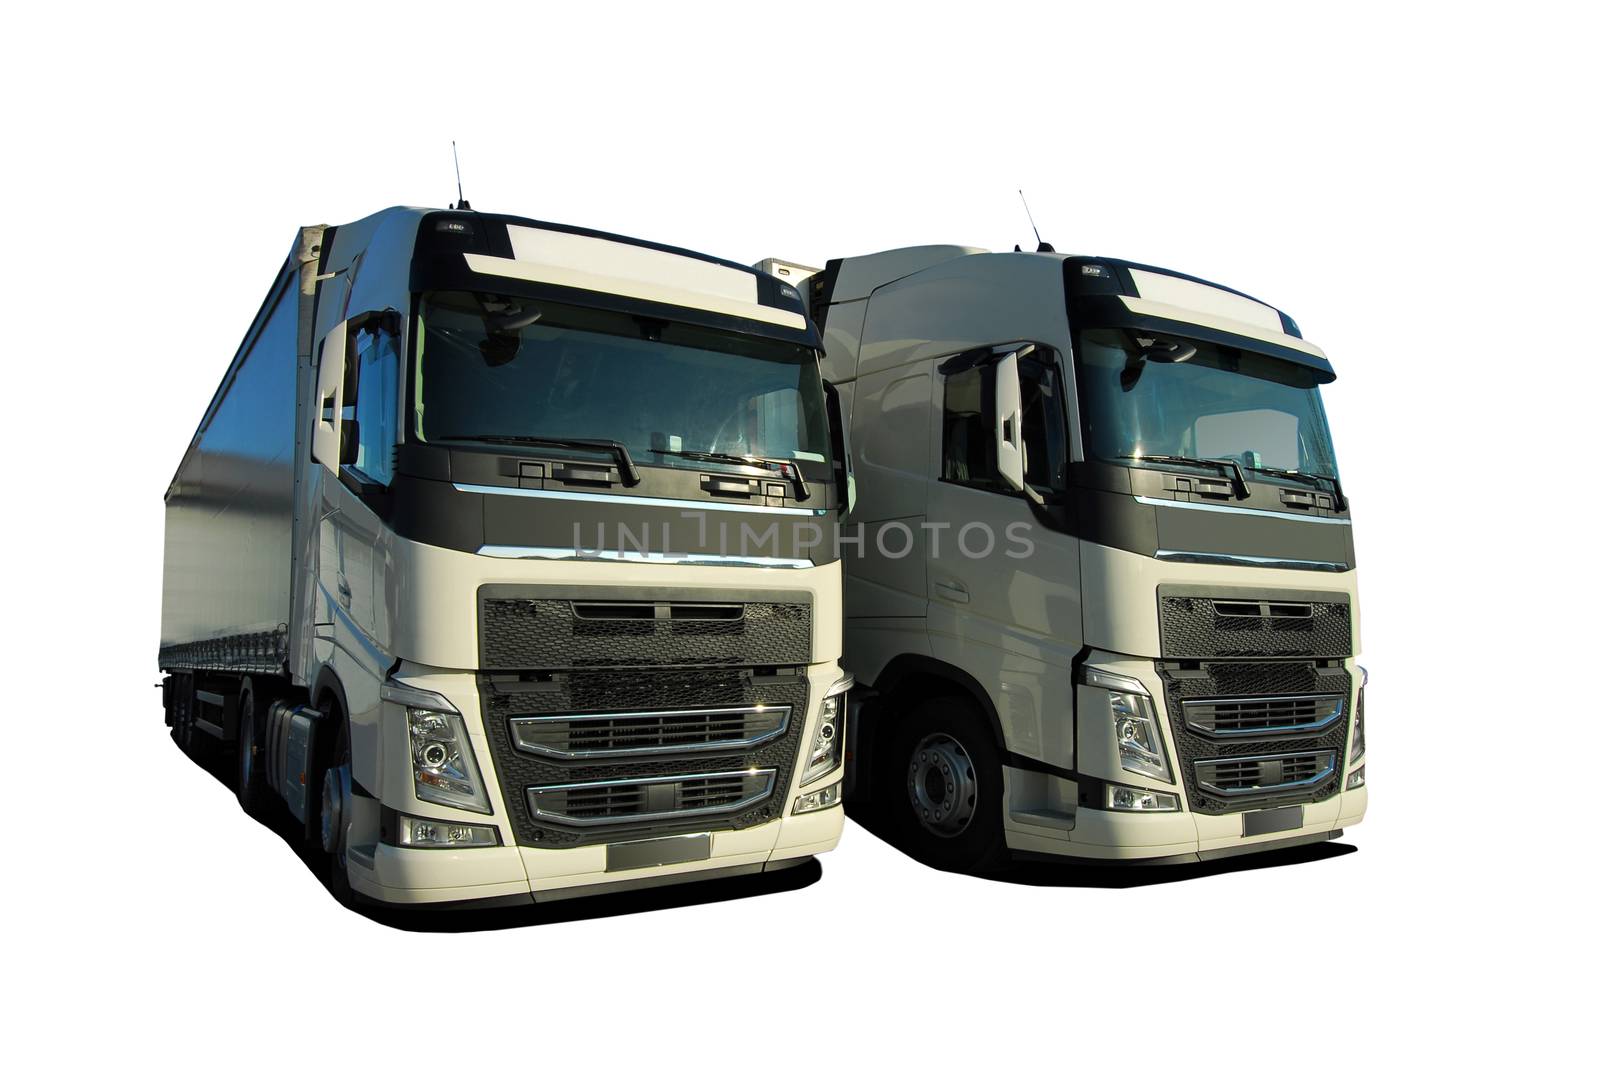 two trucks by aselsa